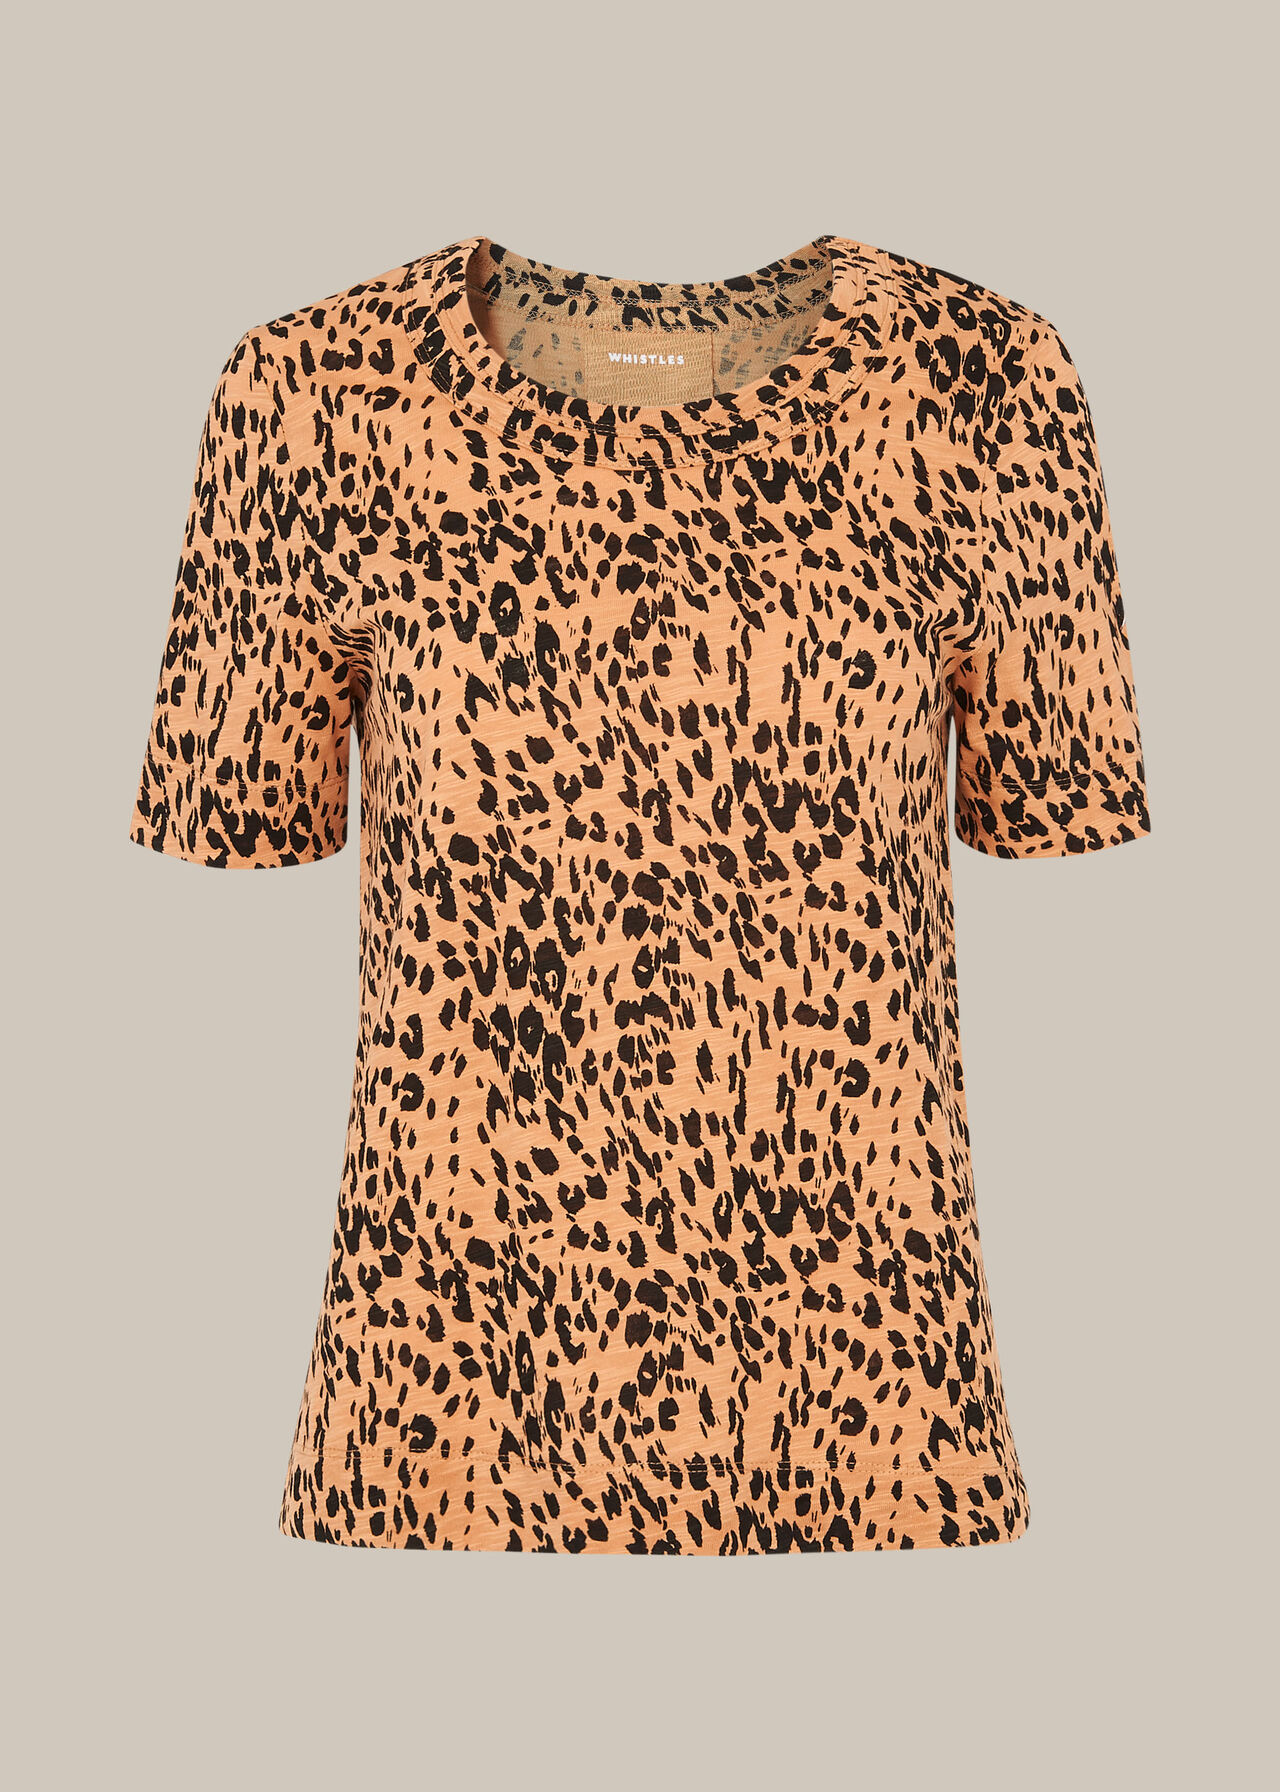 Leopard Print Safari Print Rosa Tshirt | WHISTLES